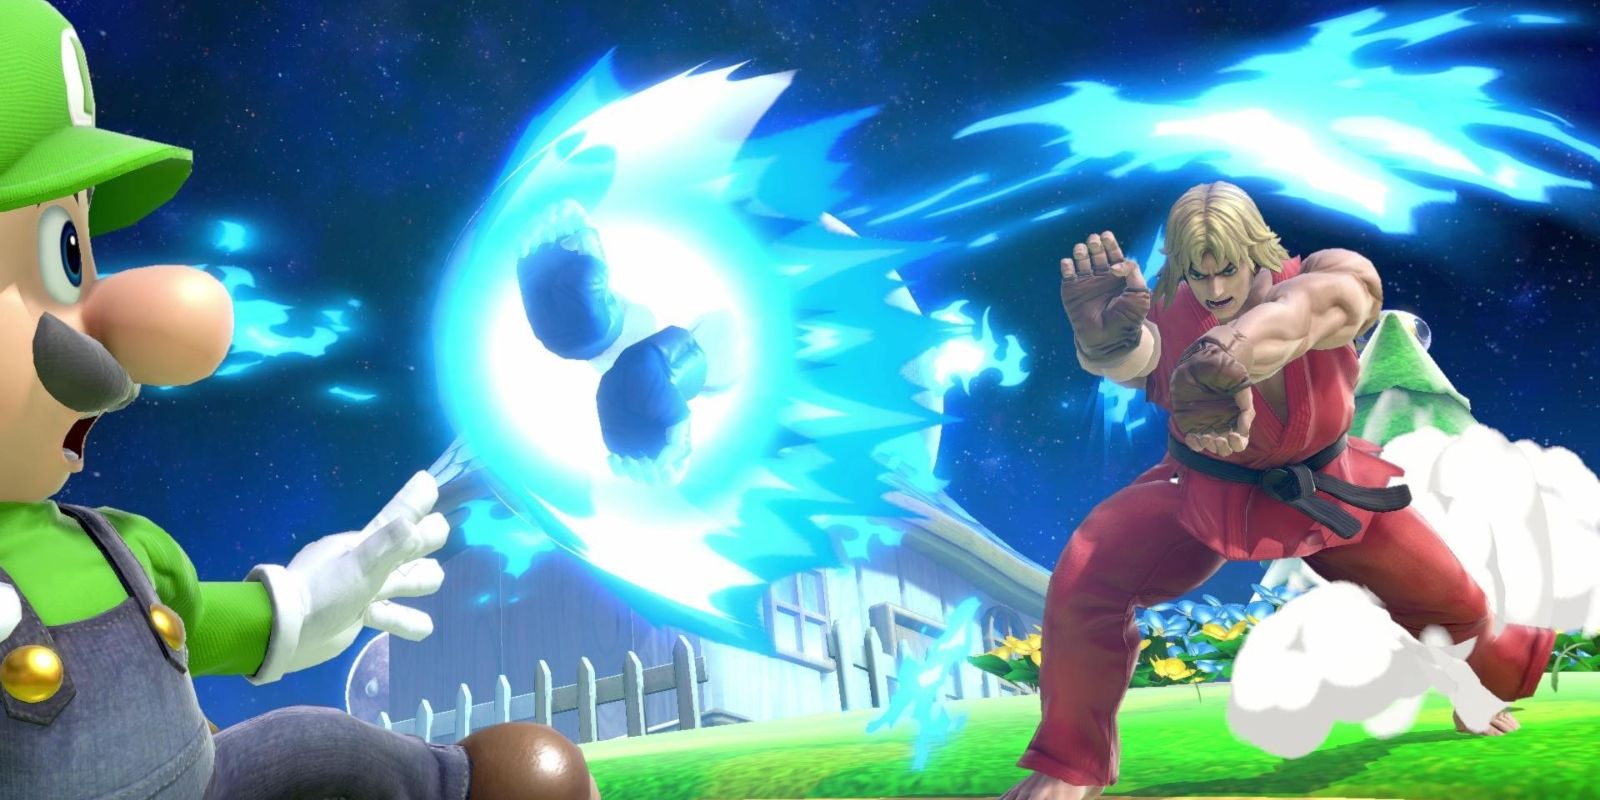 Ken fighting Luigi in Super Smash Bros. Ultimate.